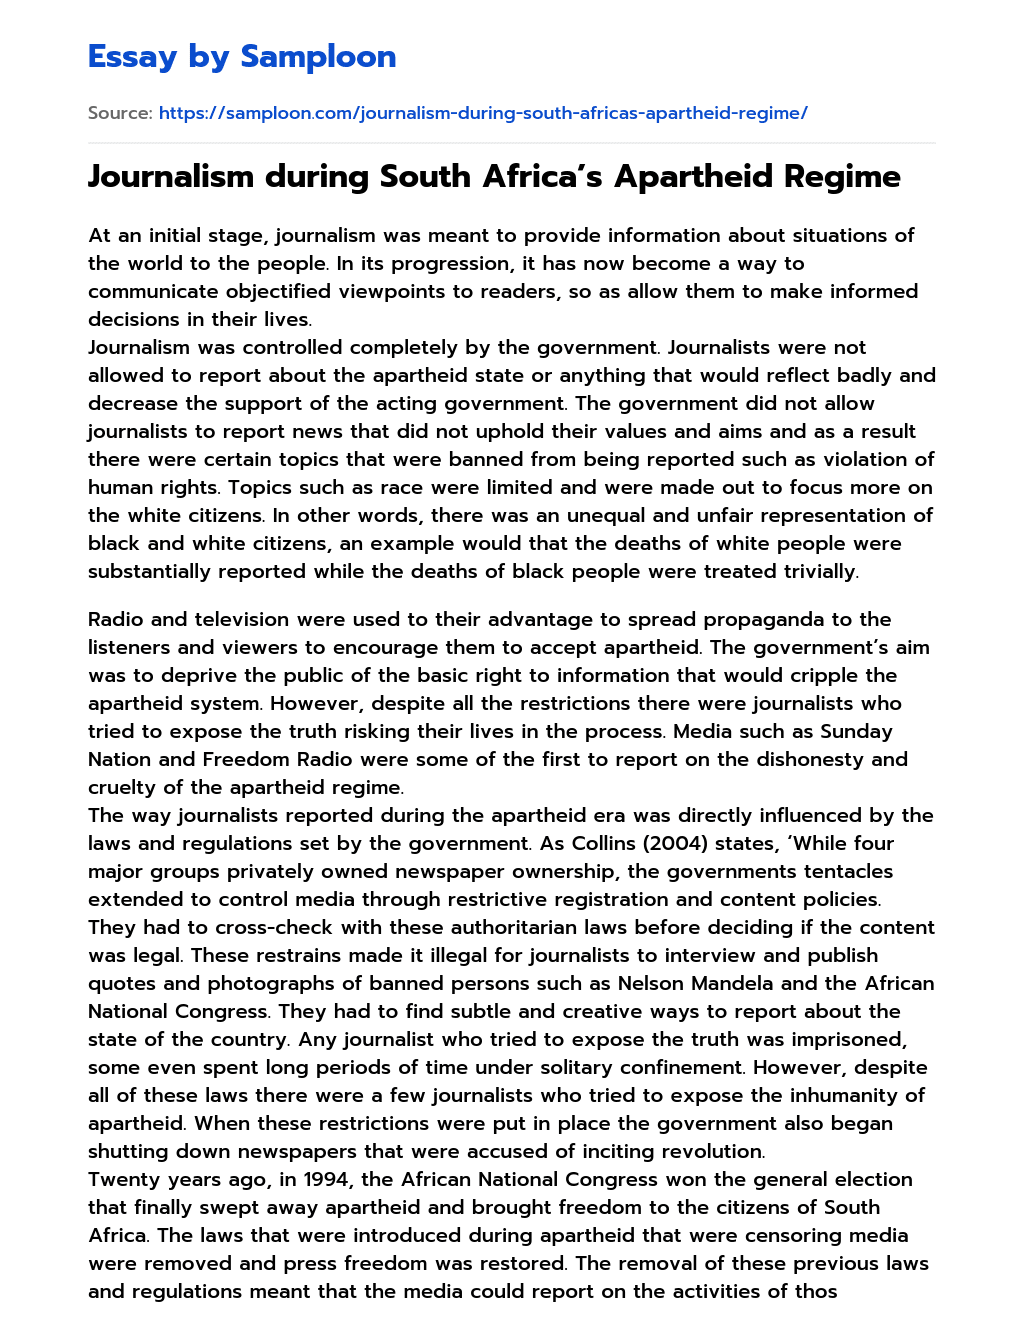 Journalism during South Africa’s Apartheid Regime essay